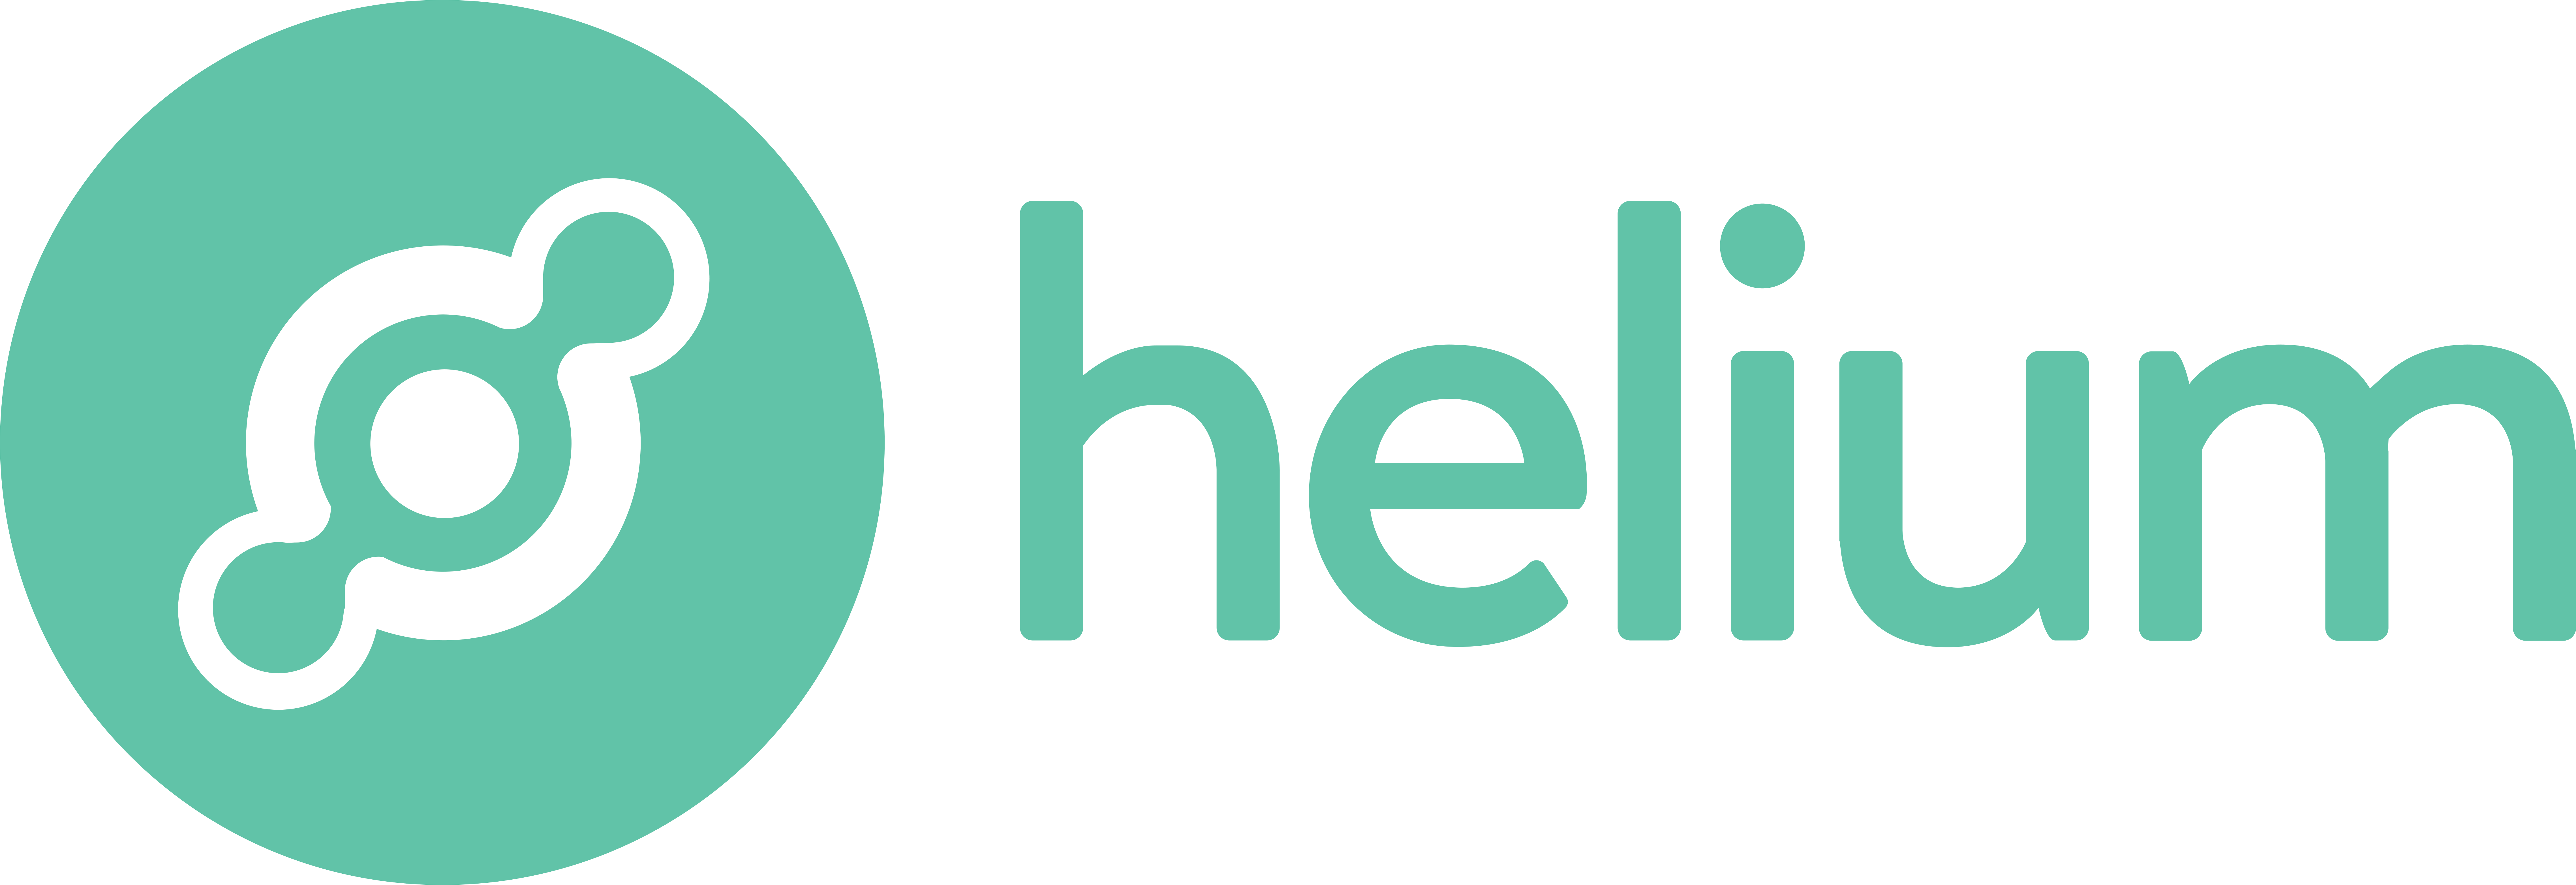 Helium Systems, Inc.